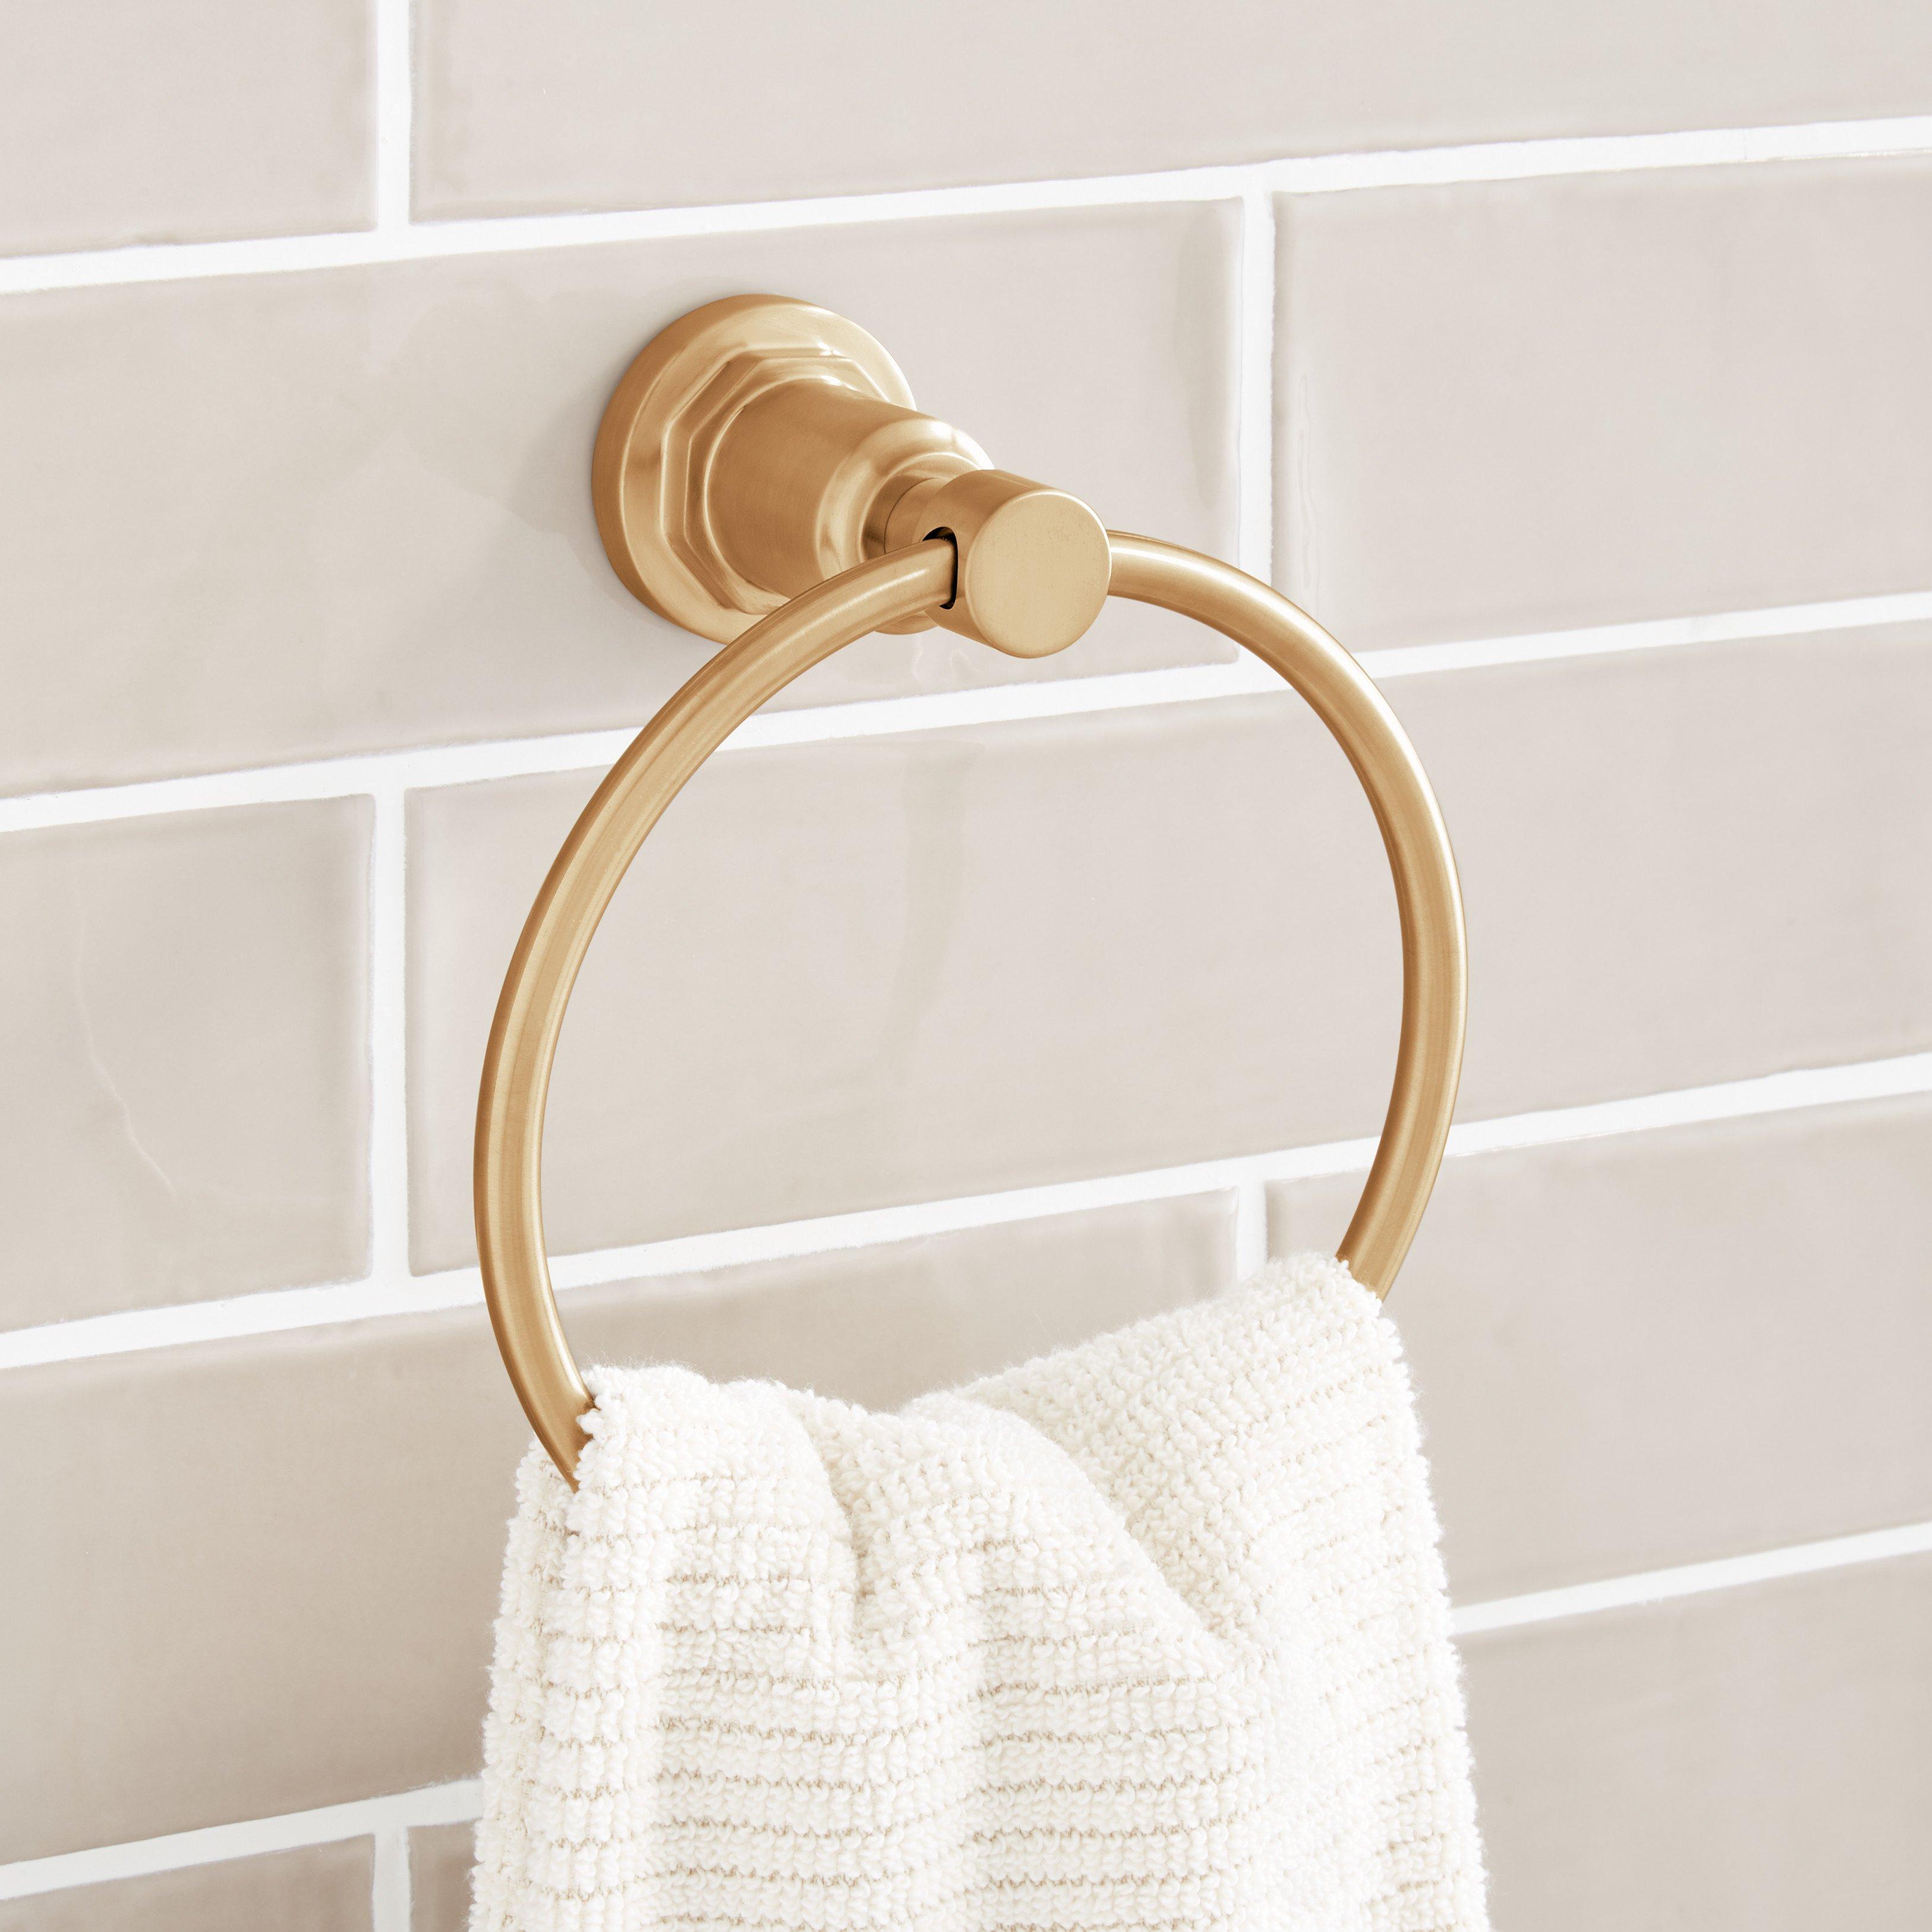 Elegant Brass Bathroom Accessories | Stylish Hanging Towel Rings